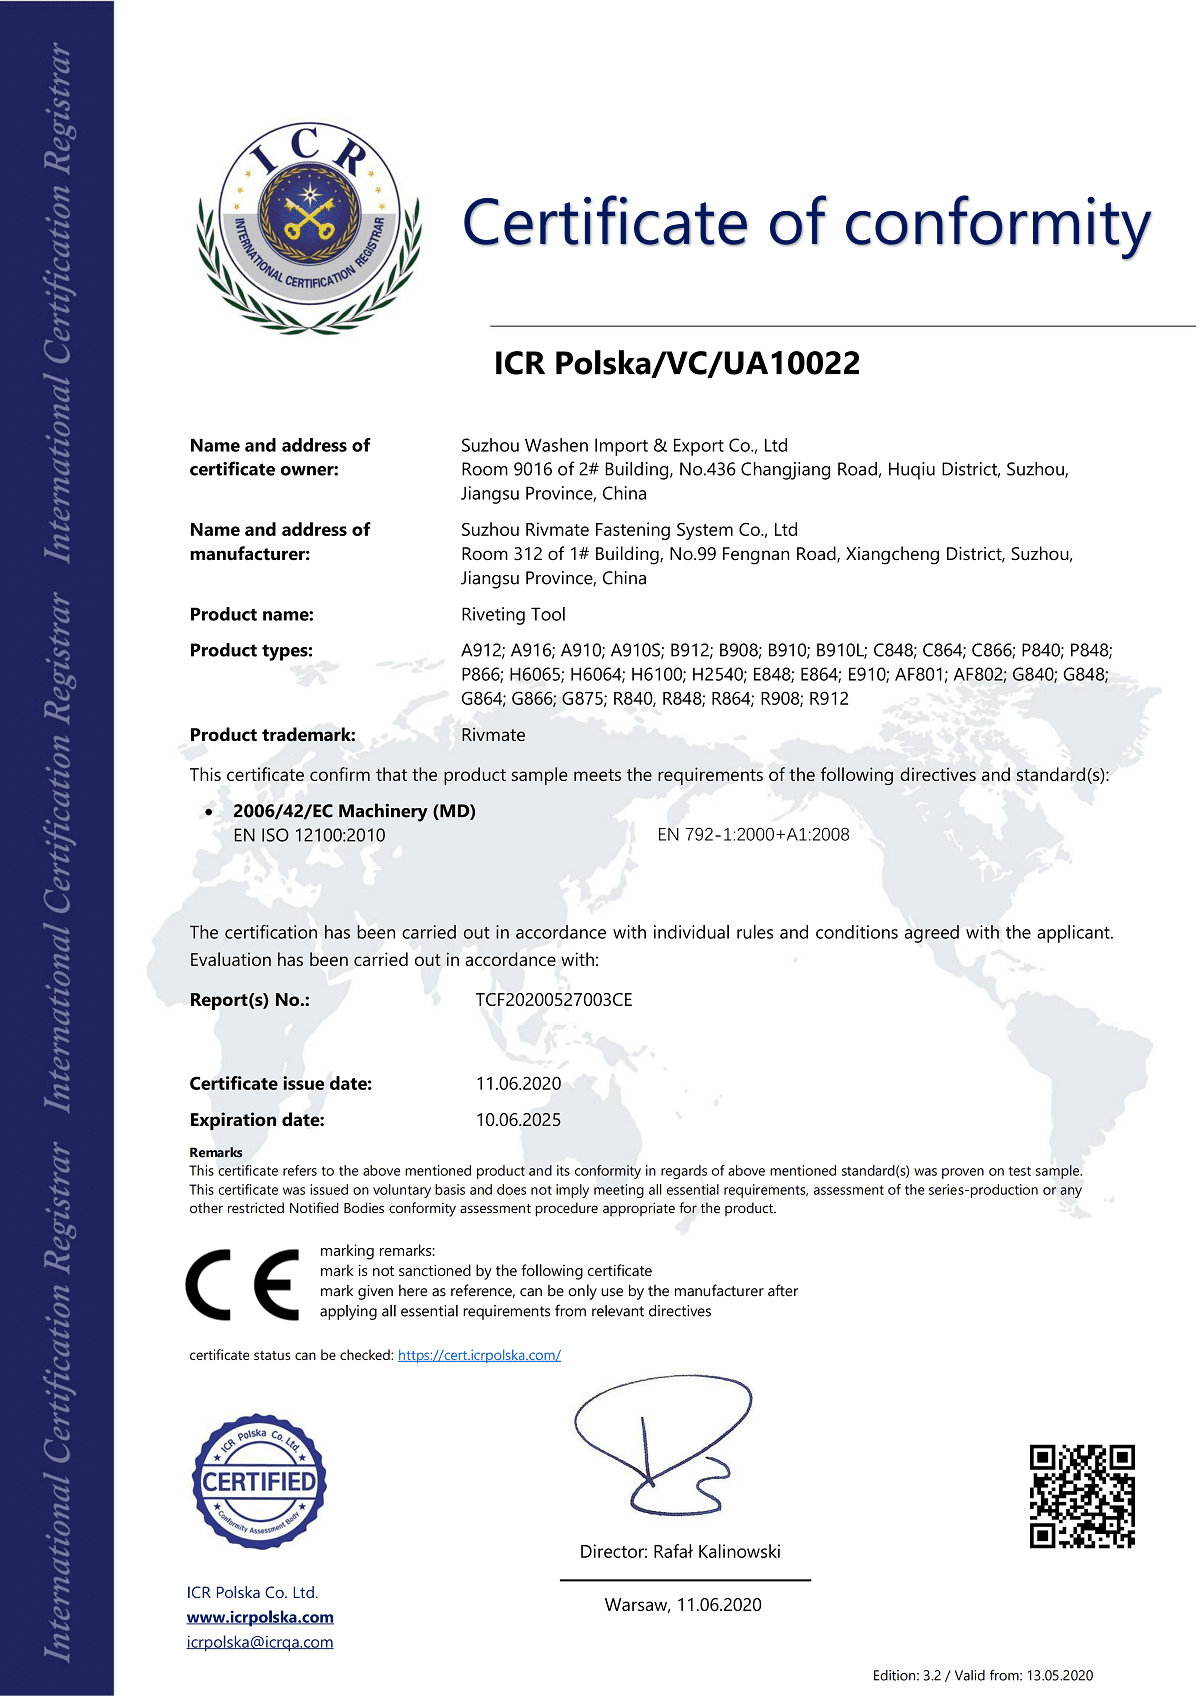 Riveting Tool CE Certificate